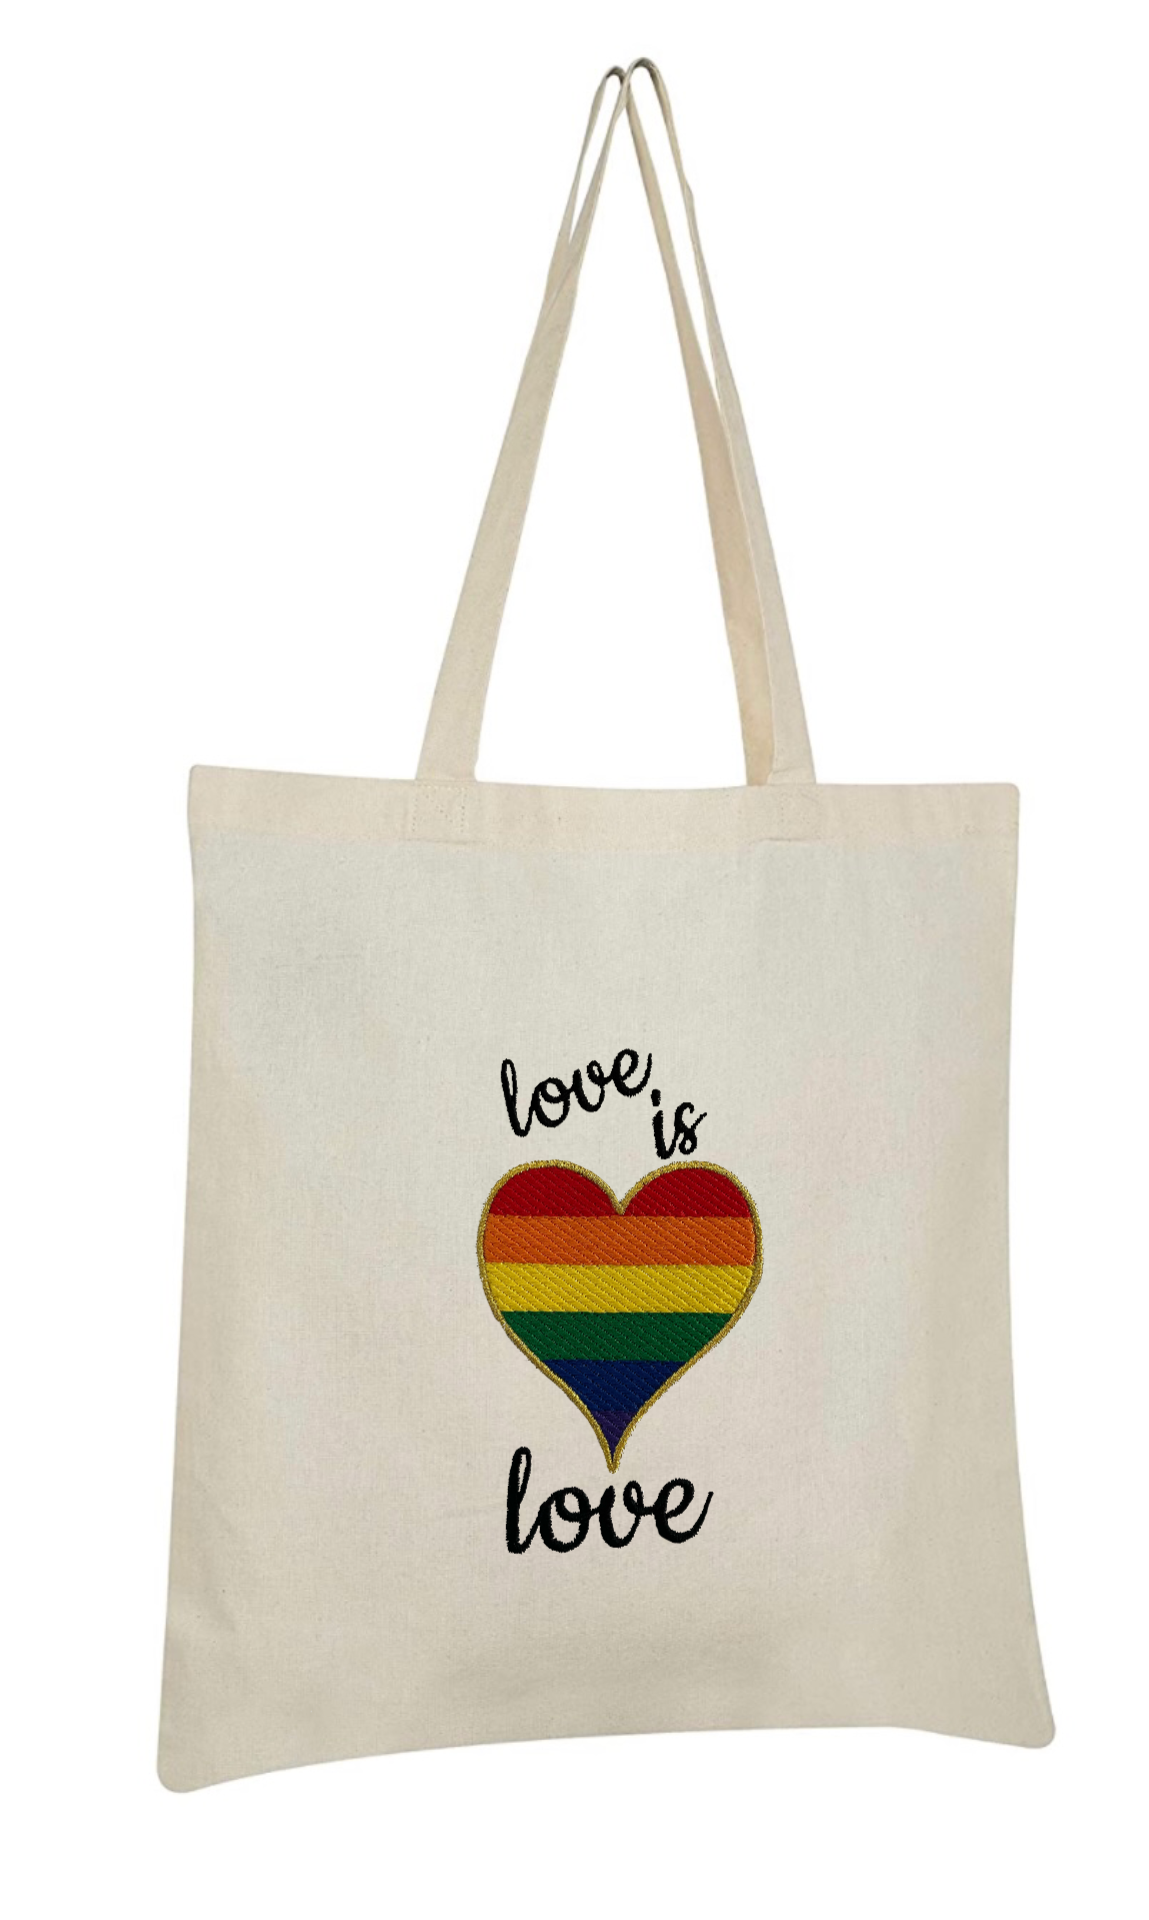 rainbow tote bag